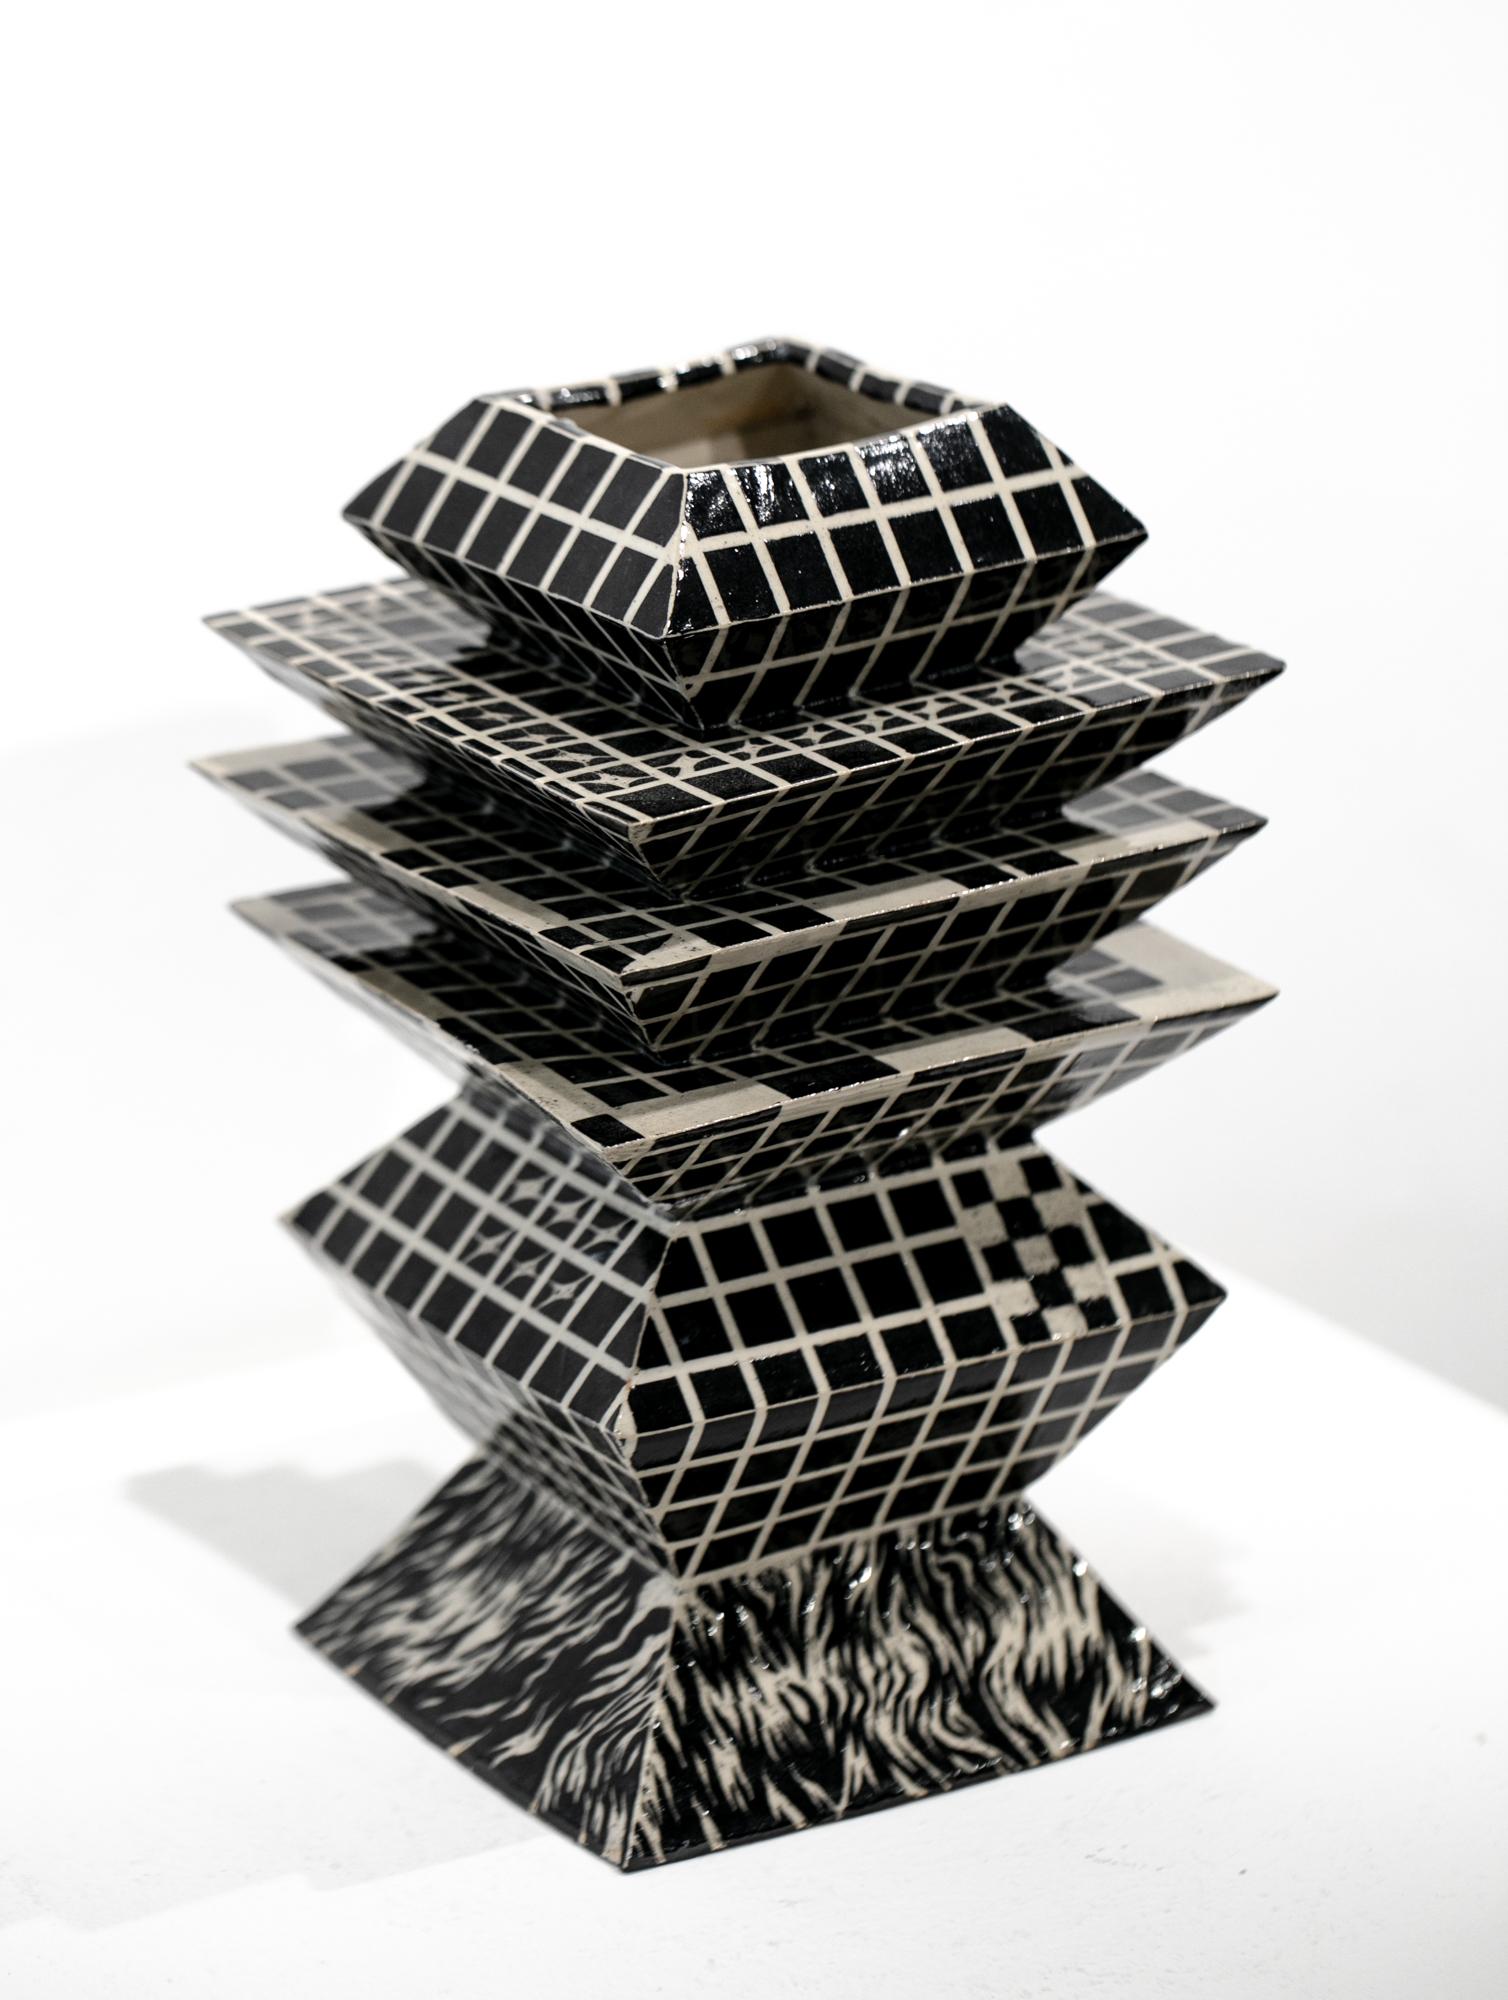 Artificer's Ritual Vessel - Sculpture by Alex Kovacs